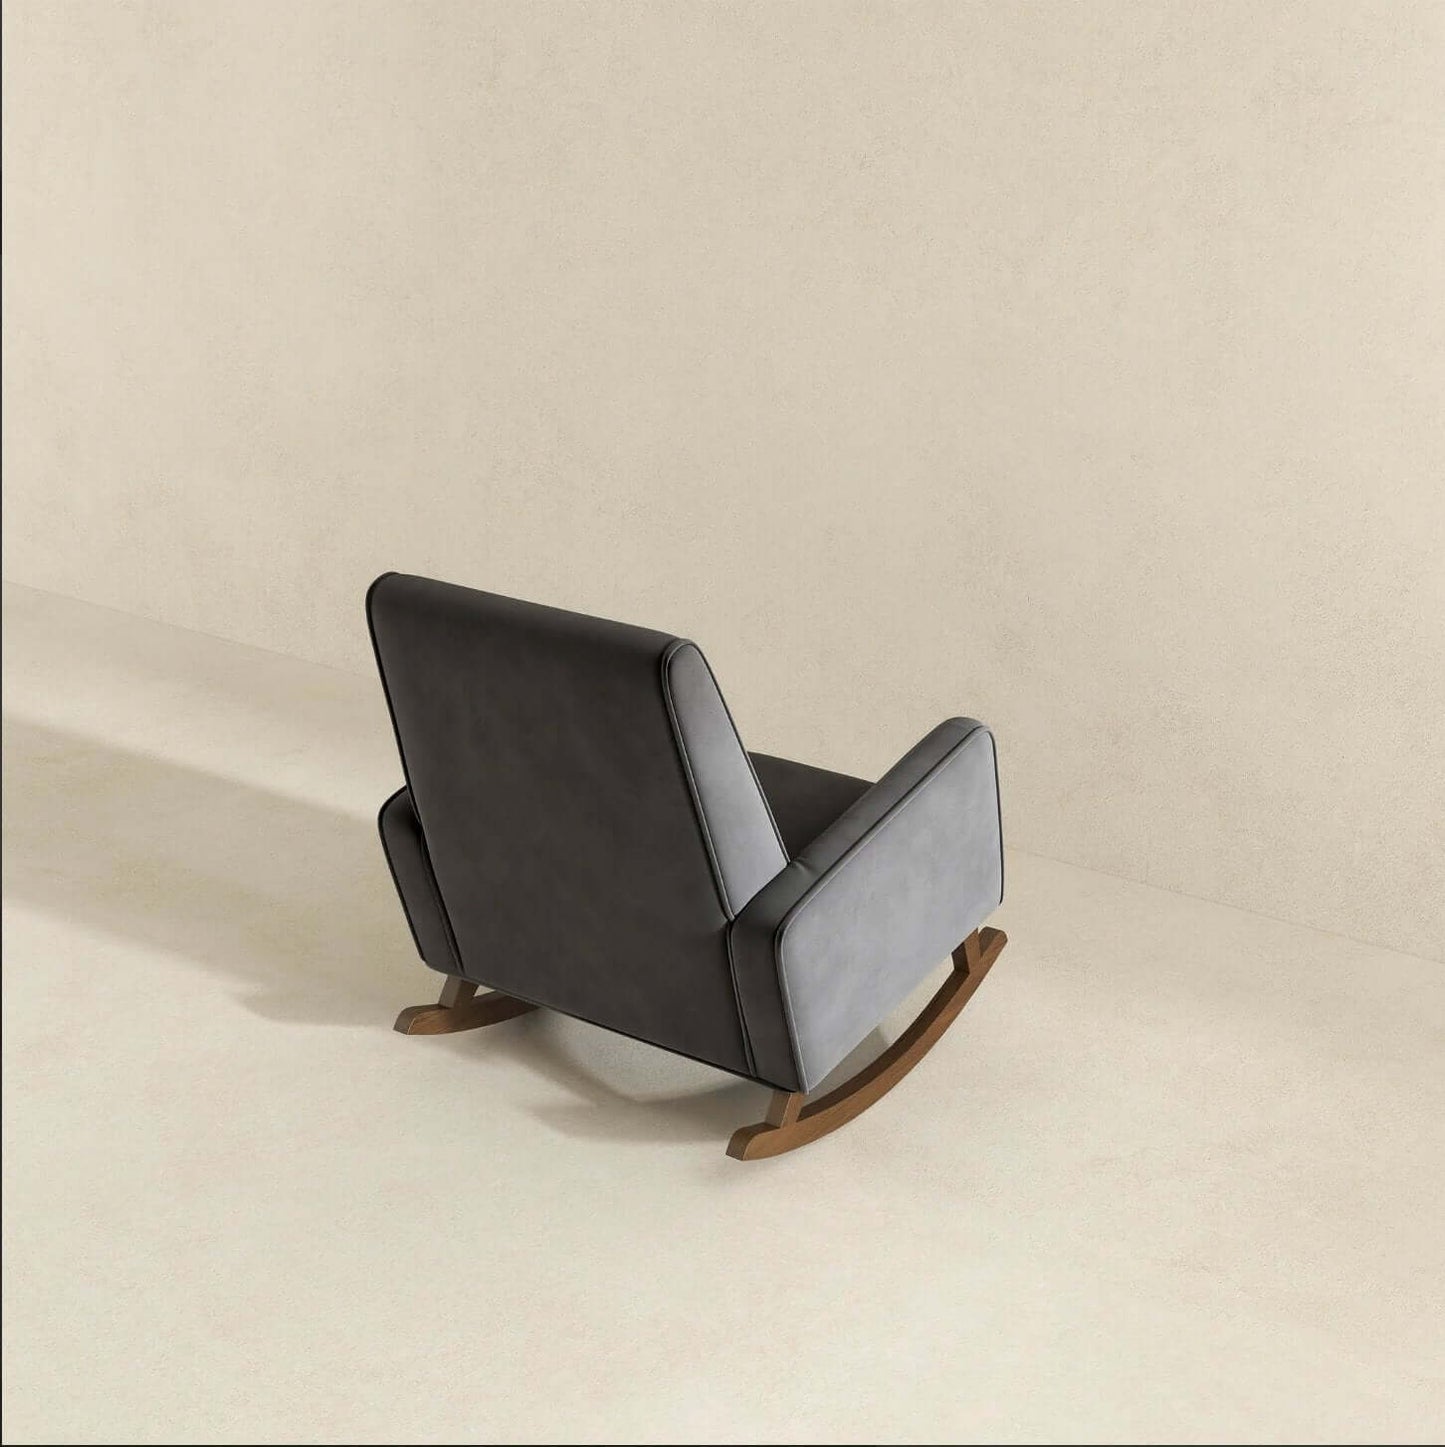 Demetrius Solid Wood Frame Upholstered Rocking Chair - Revel Sofa 